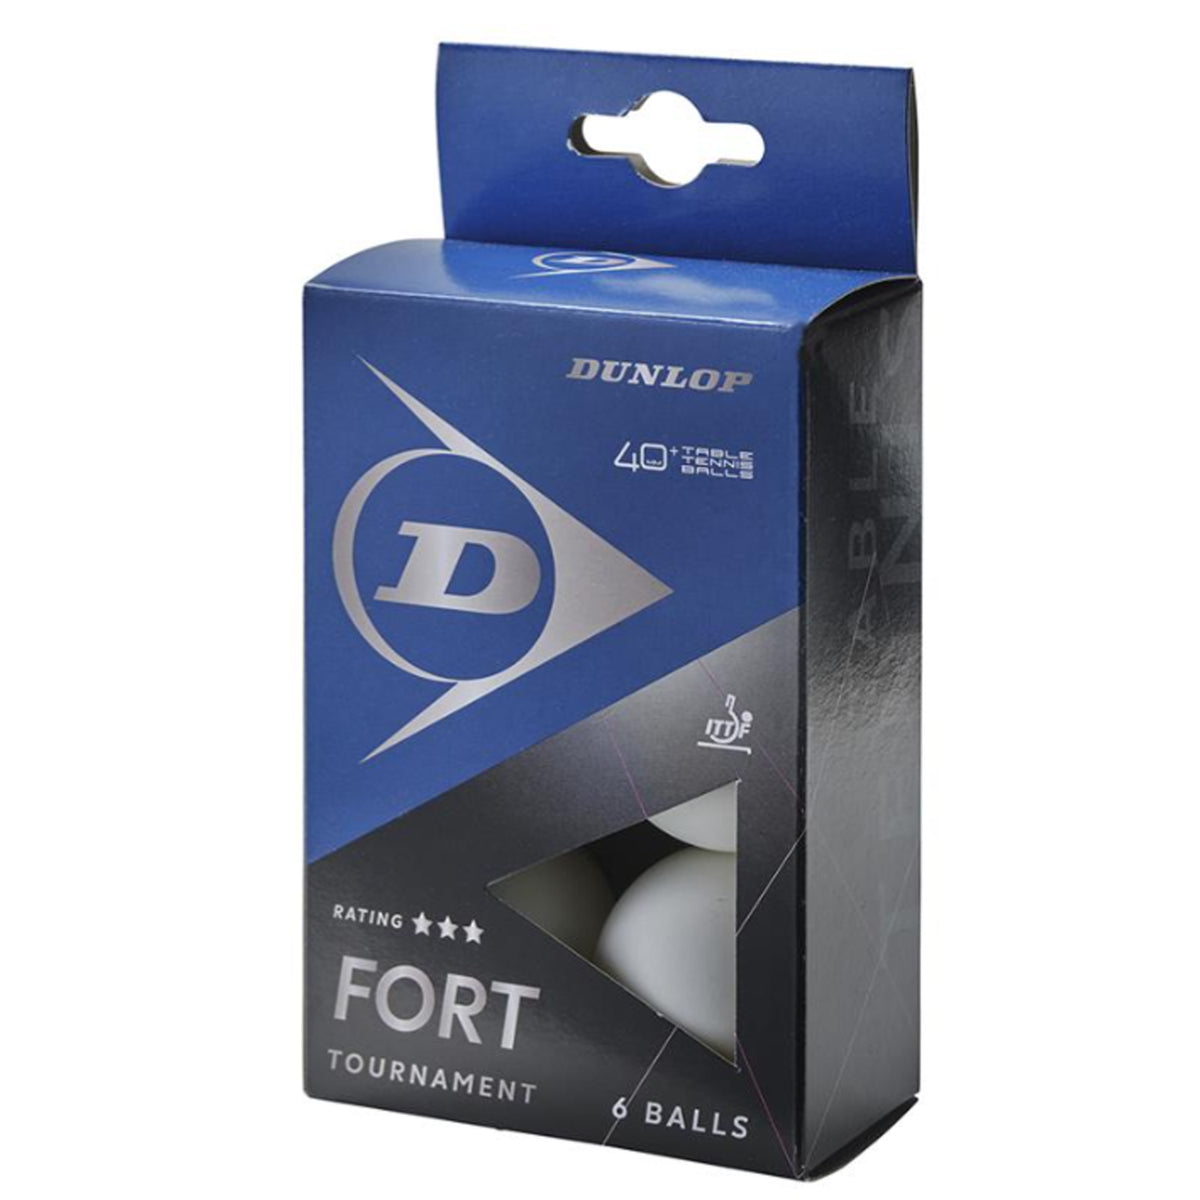 Dunlop Fort Tournament Table Tennis Balls - Box of 6